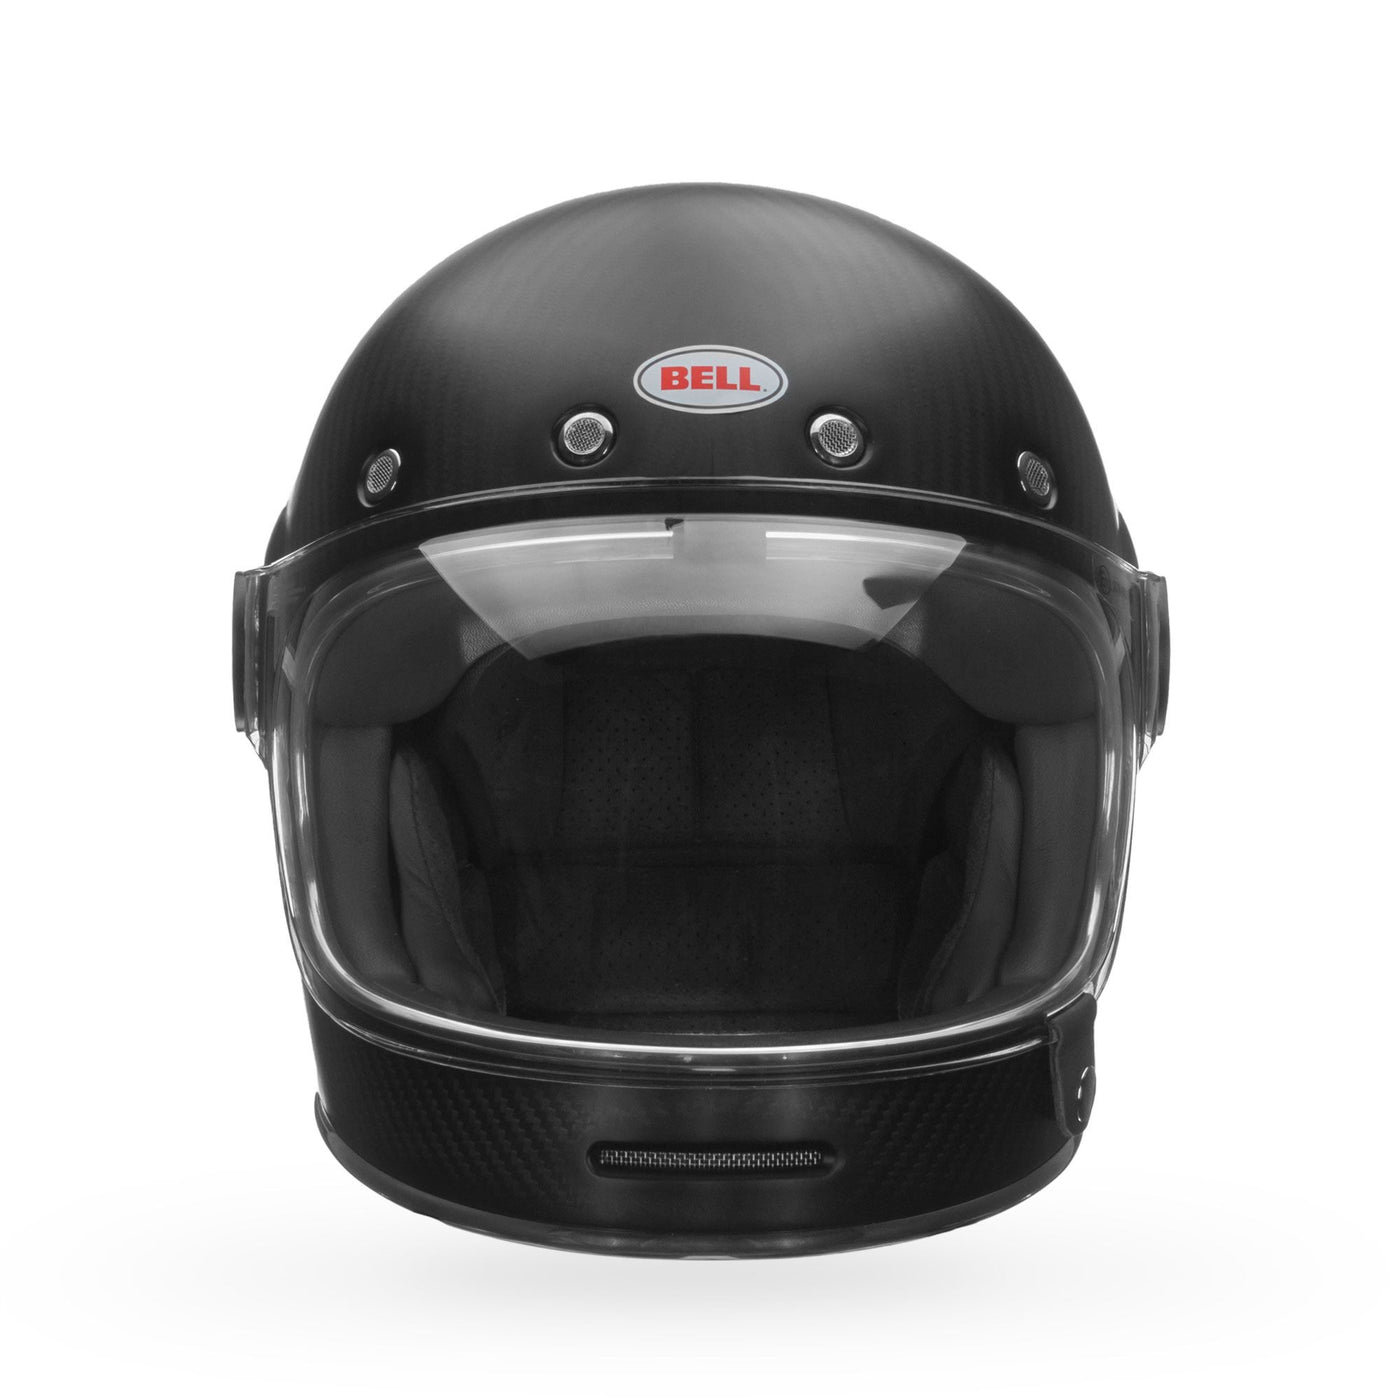 bell bullitt carbon culture classic motorcycle helmet matte bubble shield front